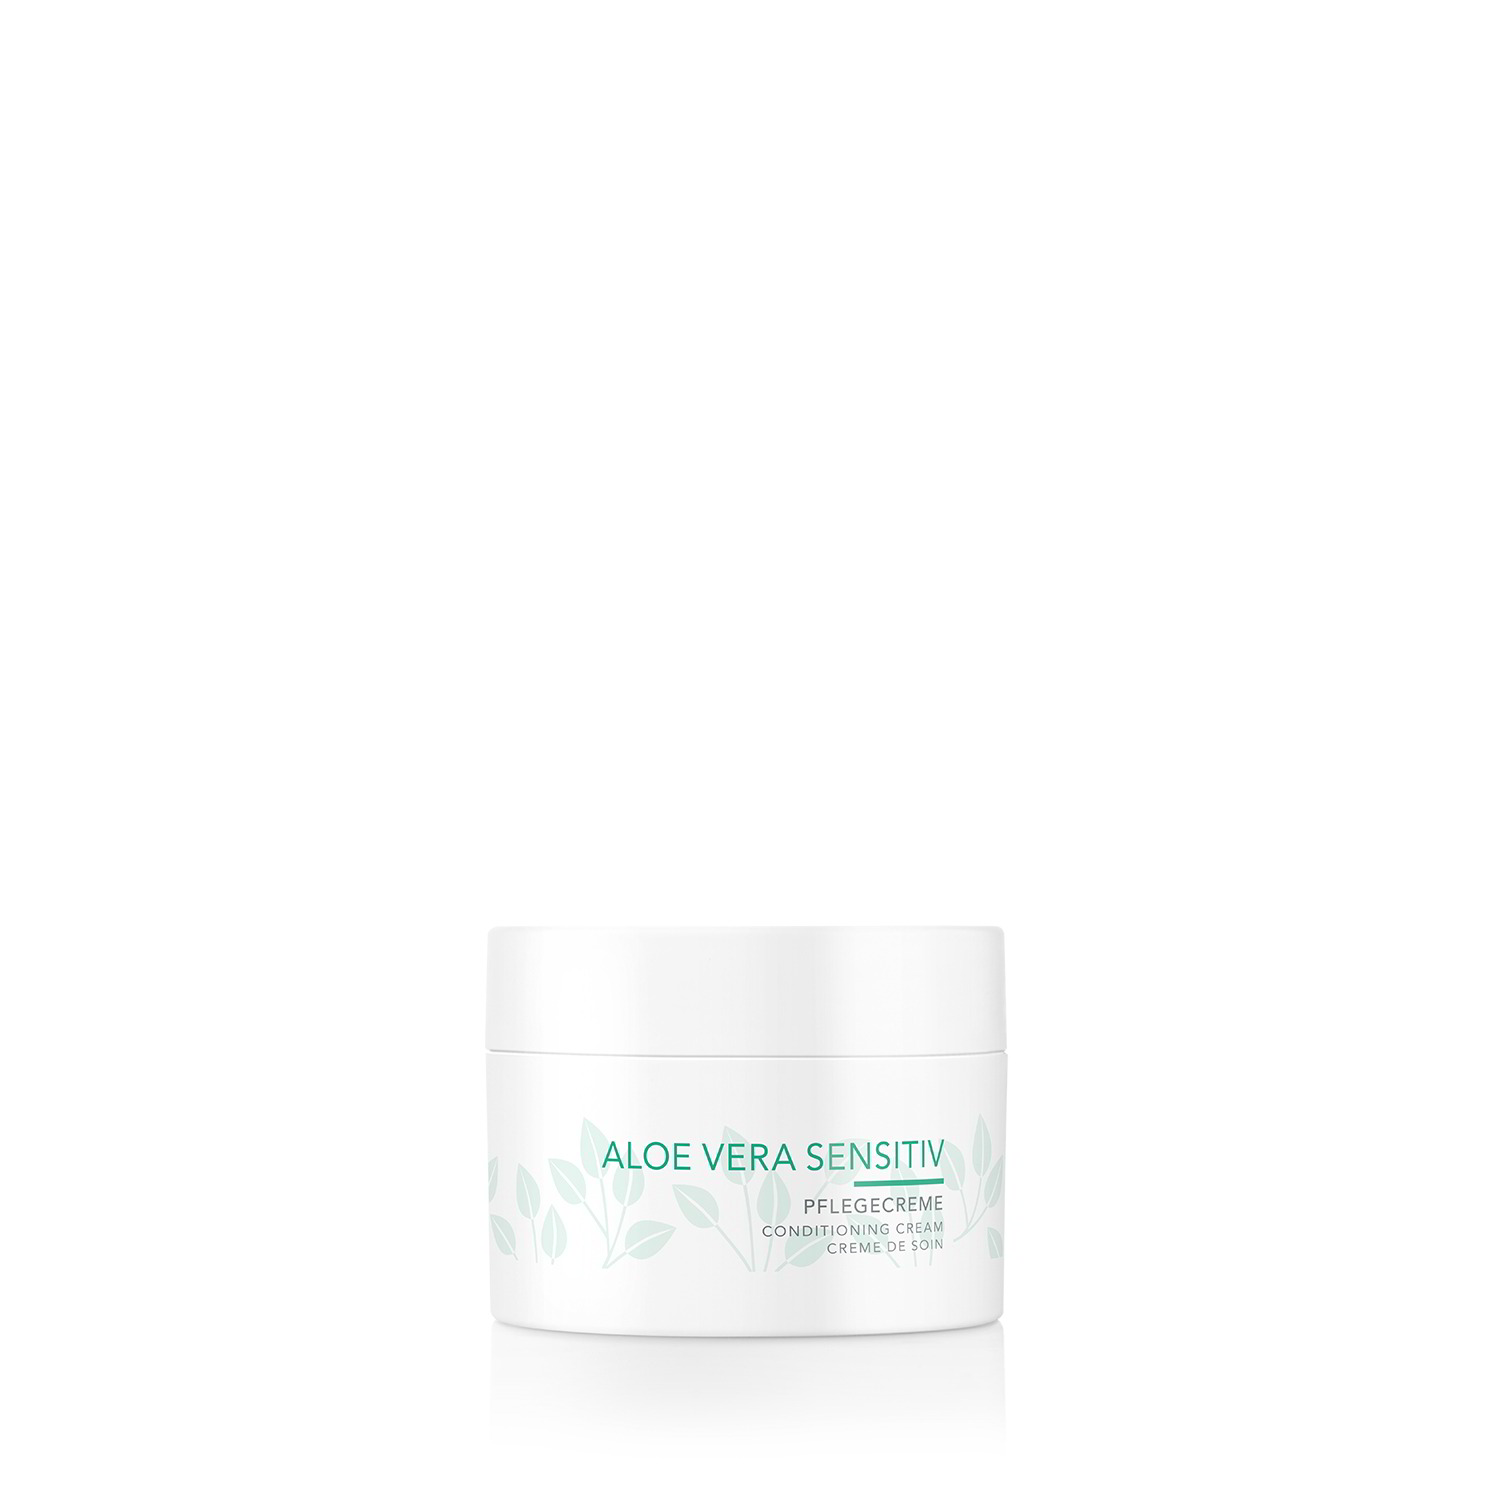 Aloe Vera Sensitiv Conditioning Cream